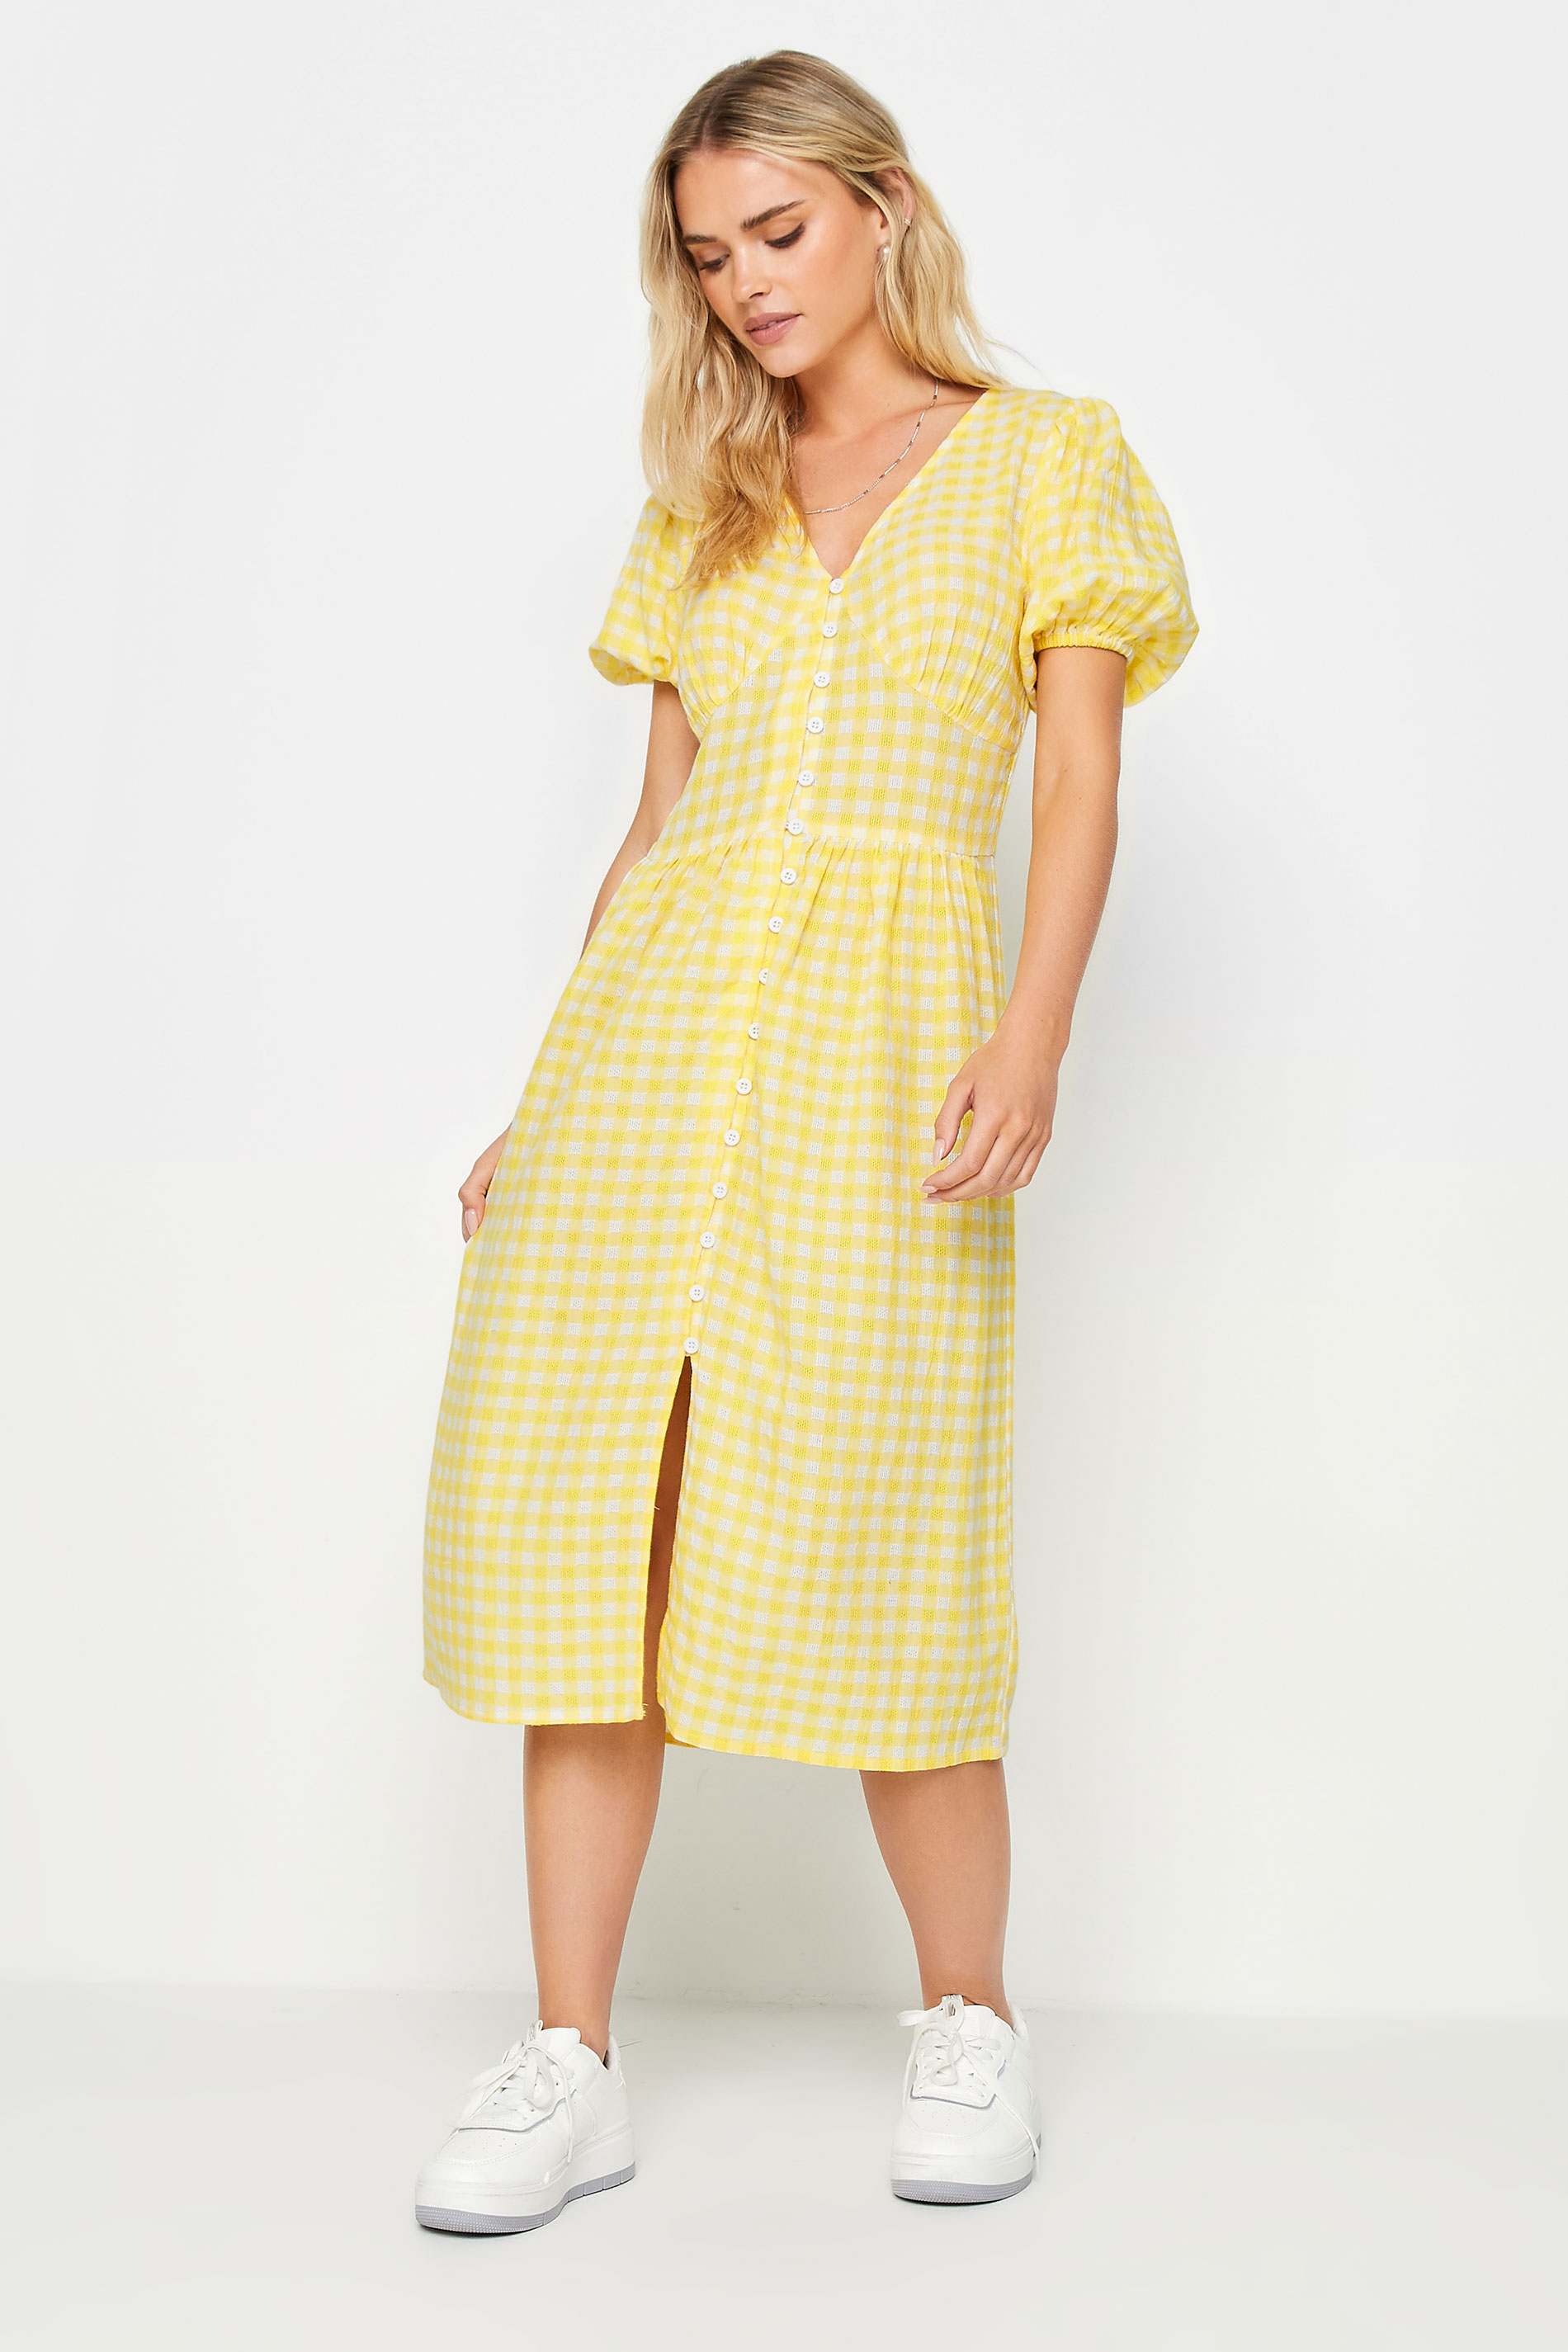 PixieGirl Petite Women's Yellow Gingham Print Button Through Midi Dress | PixieGirl 2